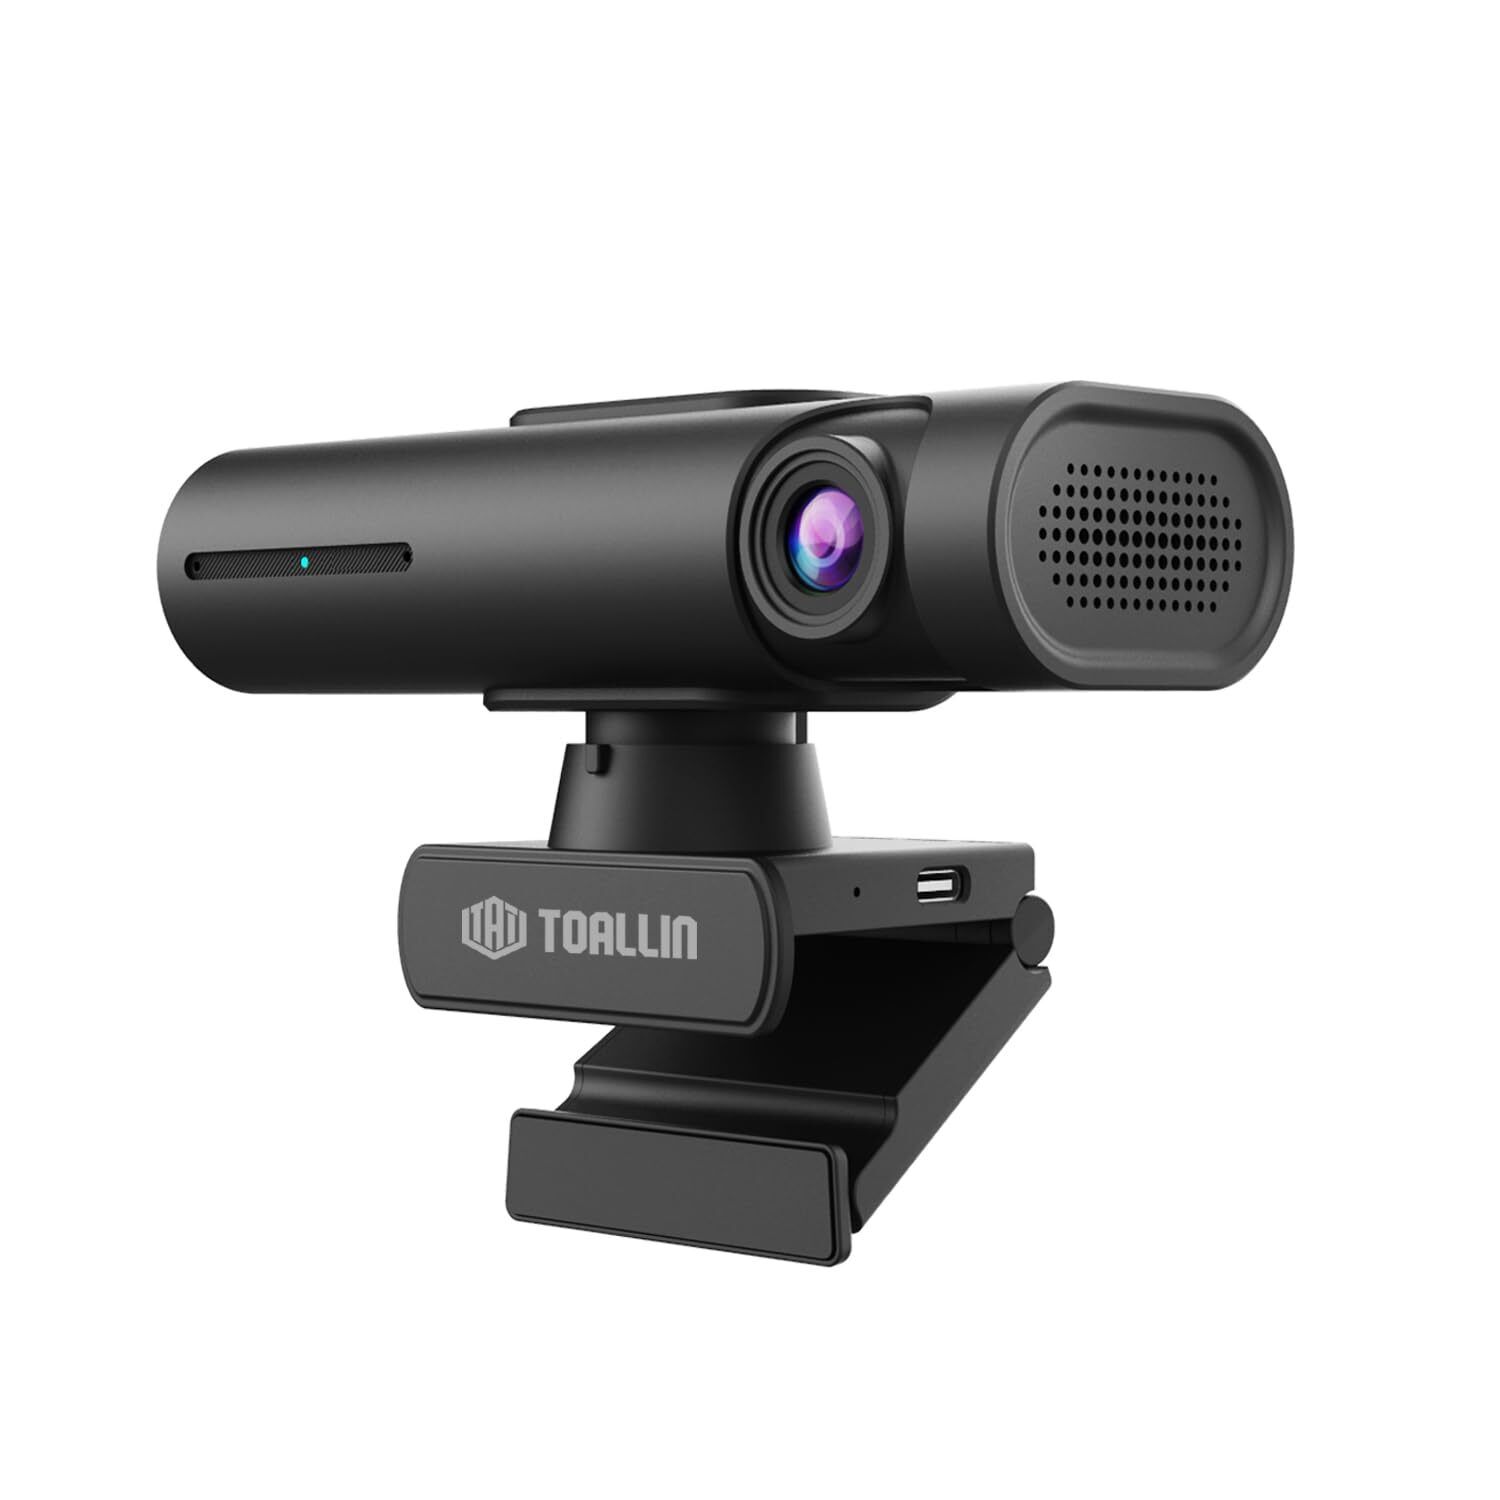 GC80 4K Auto Tracking Webcam, AI Tracking via Gesture Control, Streaming Webc...